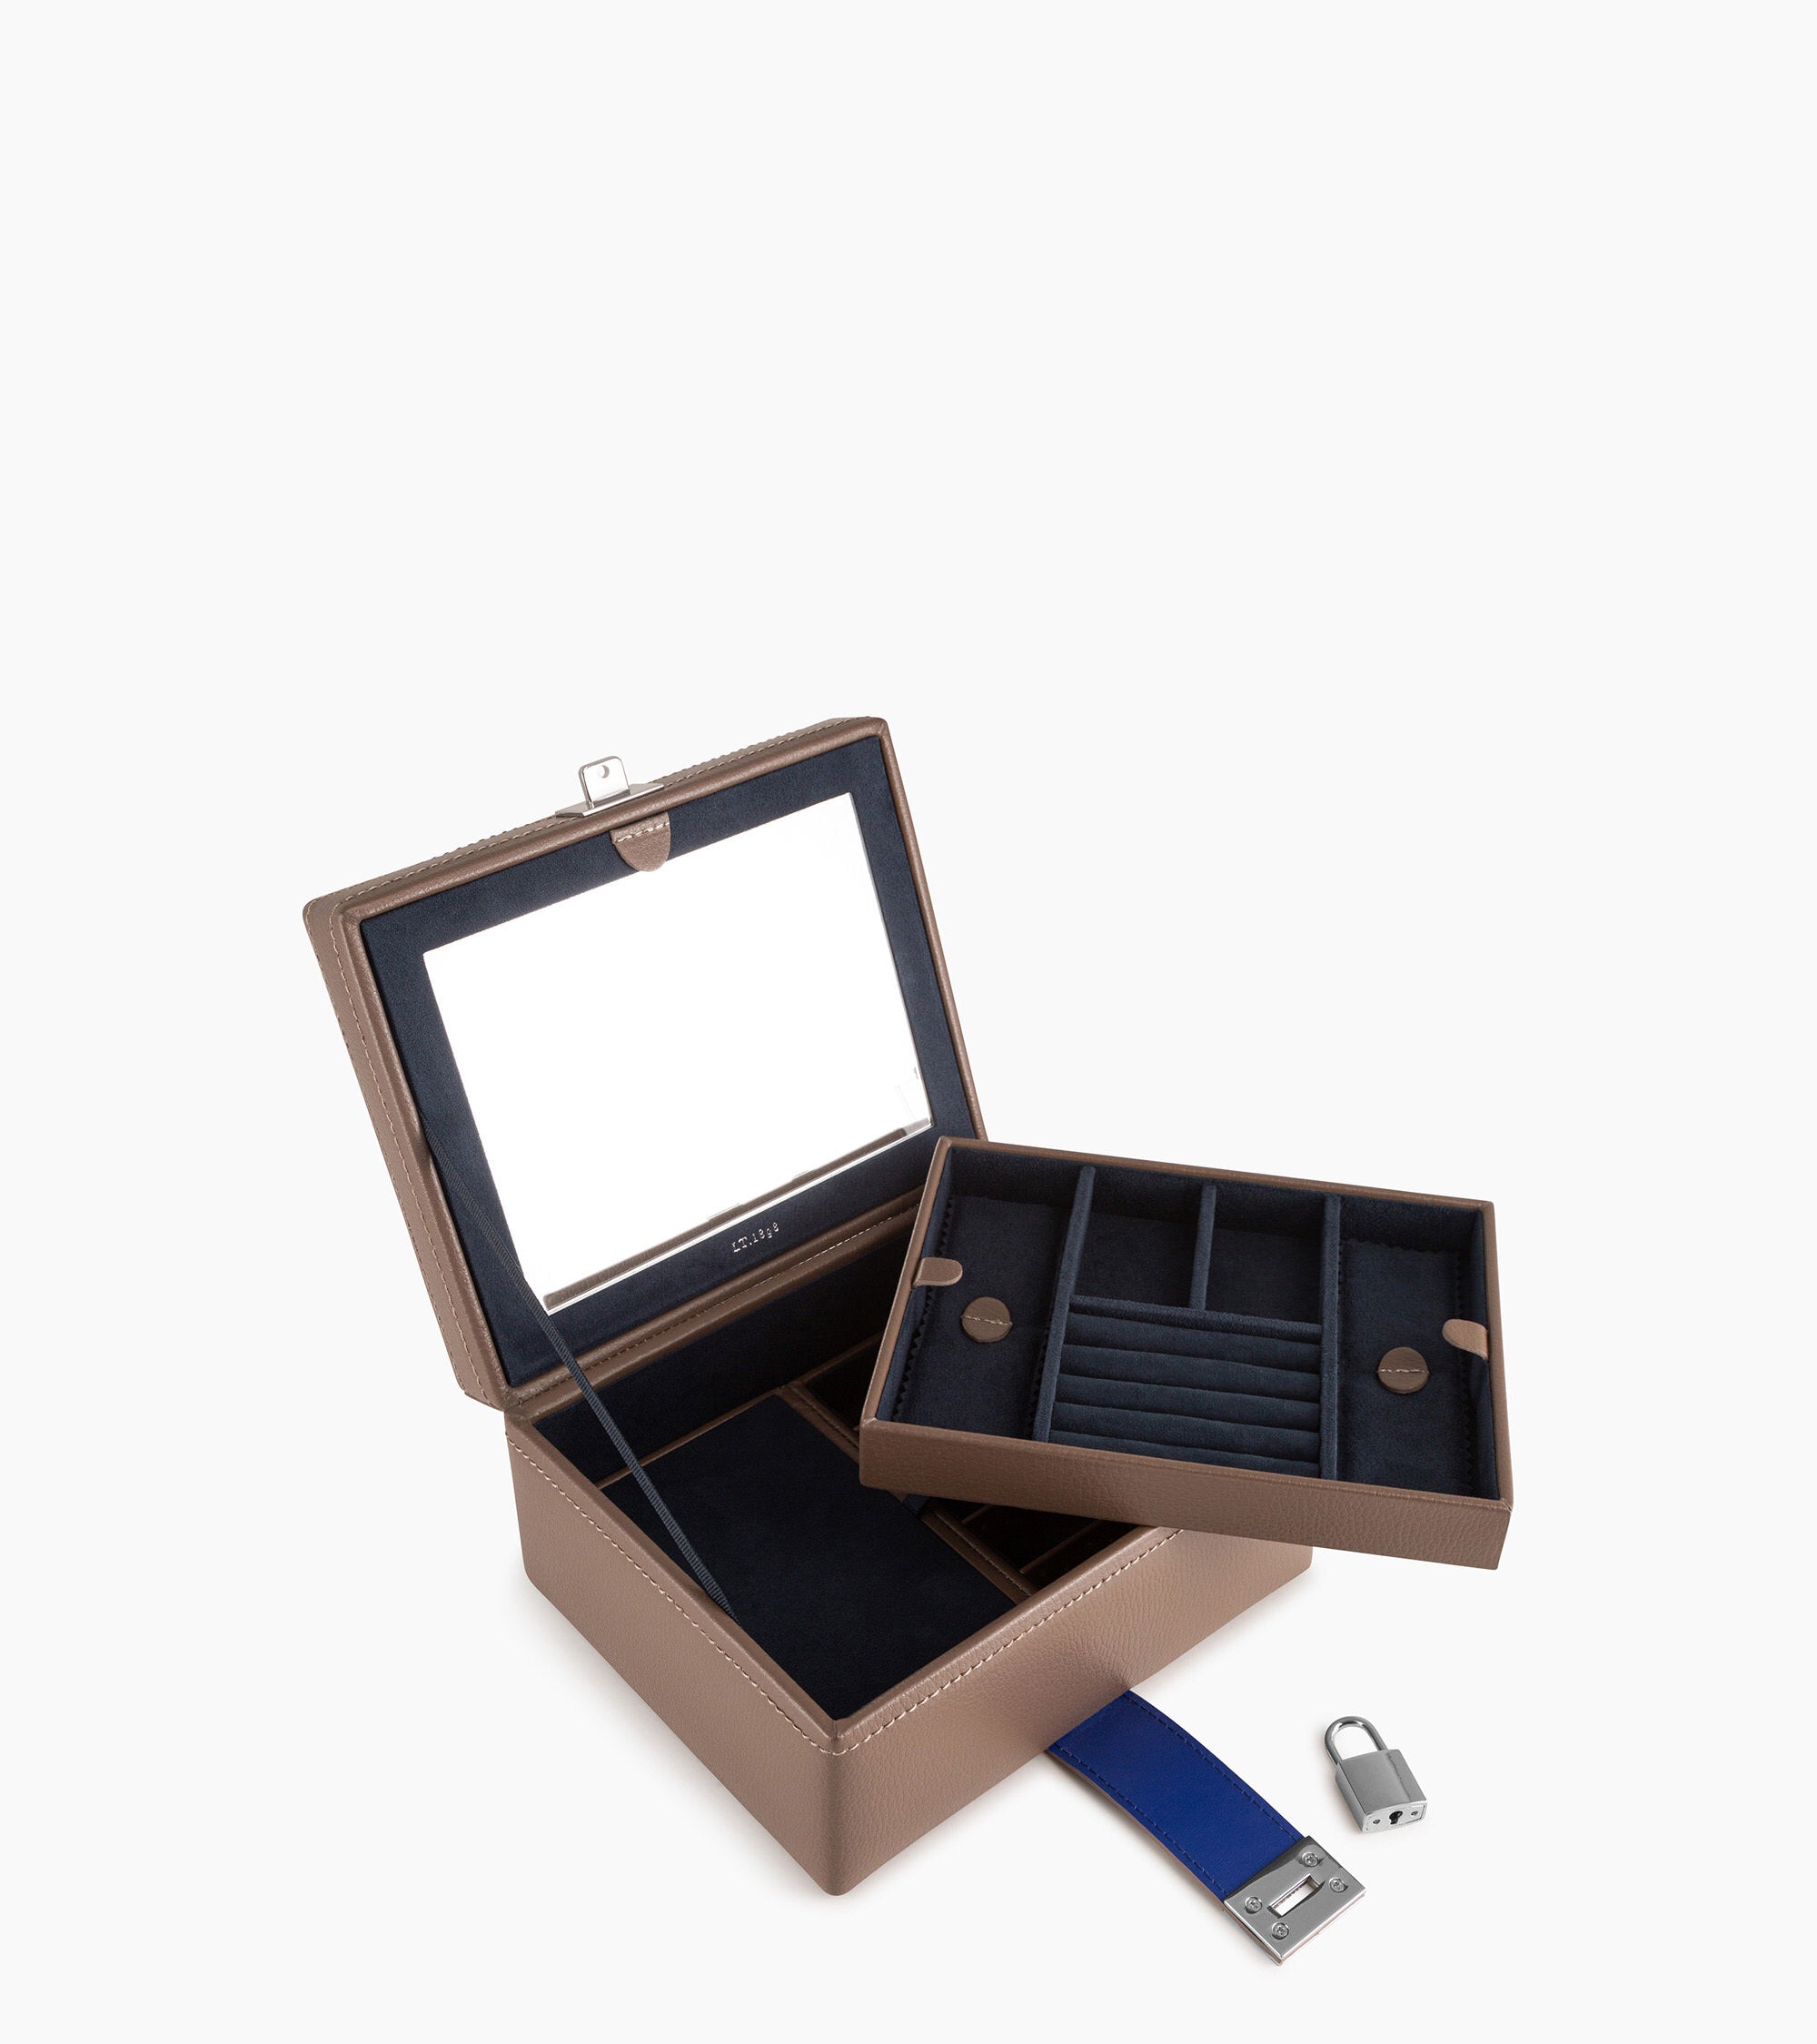 Medium jewelry box